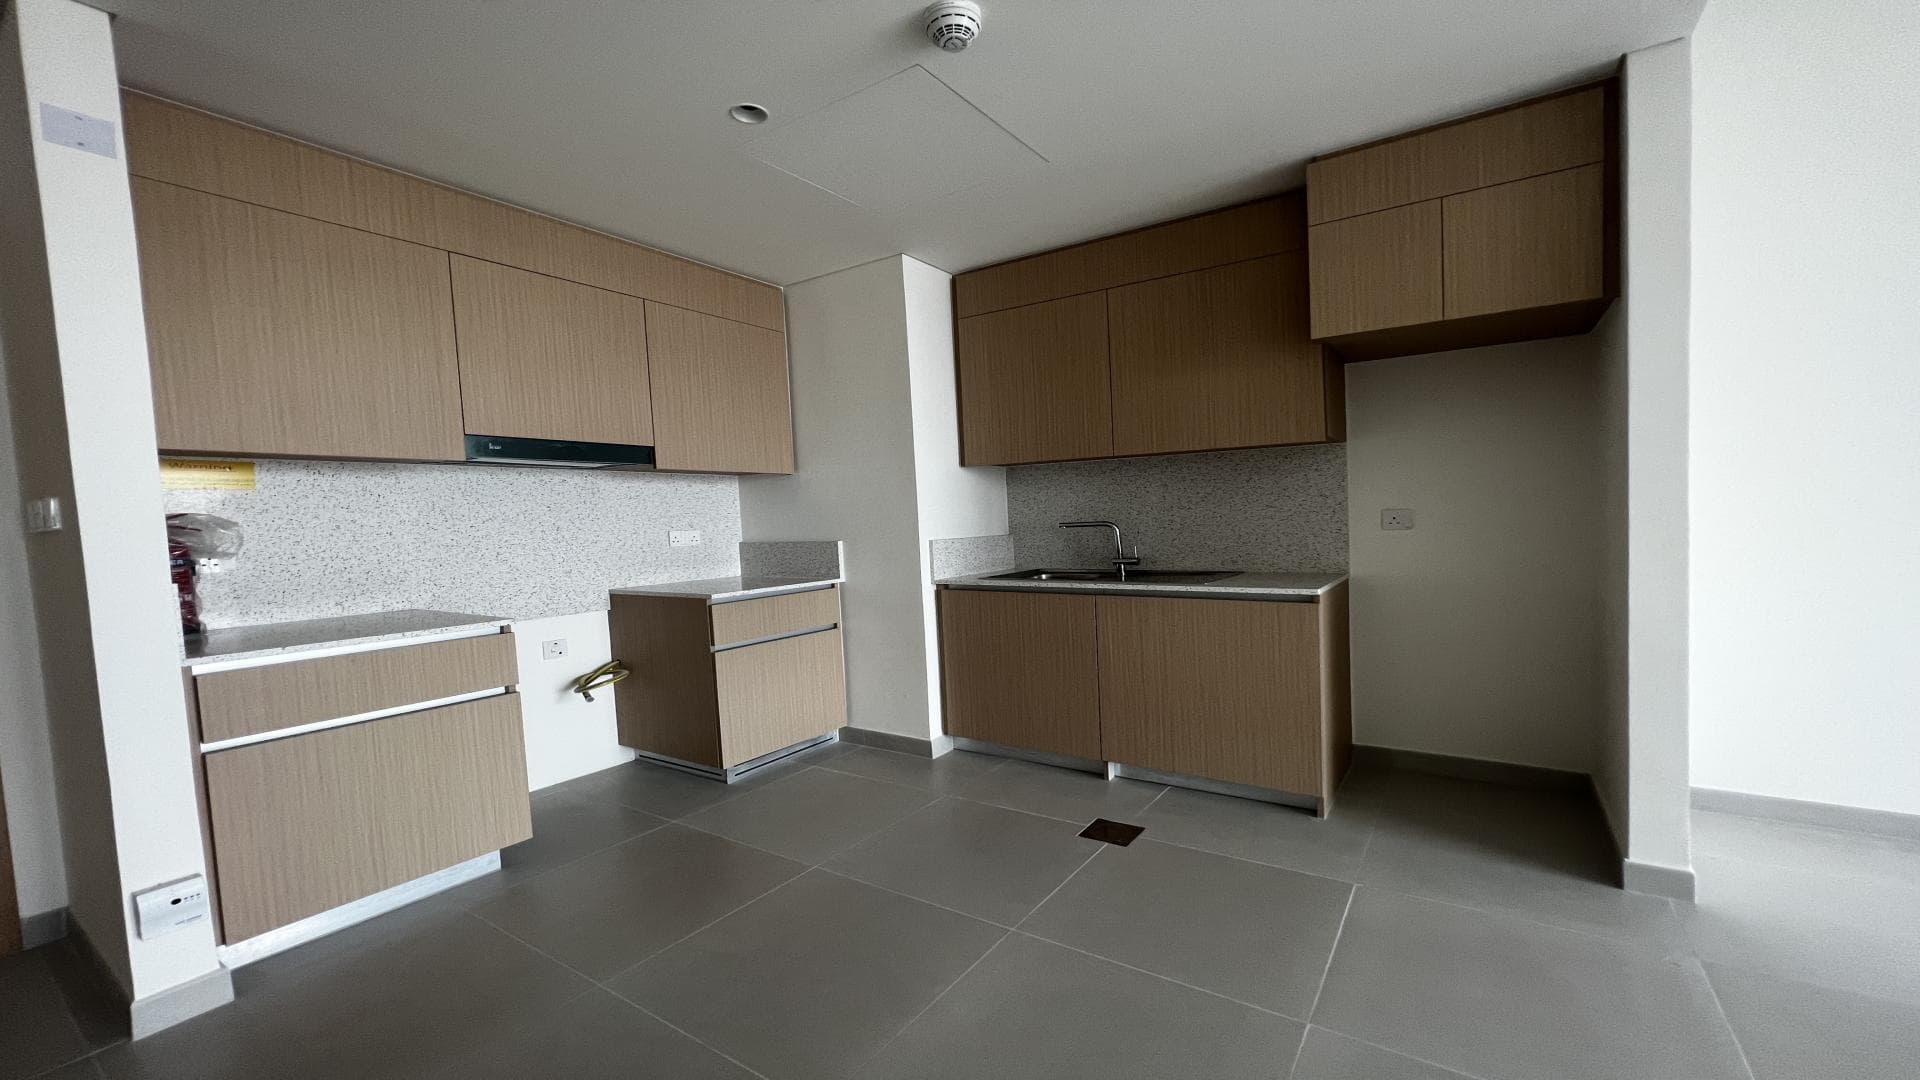 1 Bedroom Apartment For Rent Zahra Apartments 1a Lp21442 F013a67ee871300.jpg